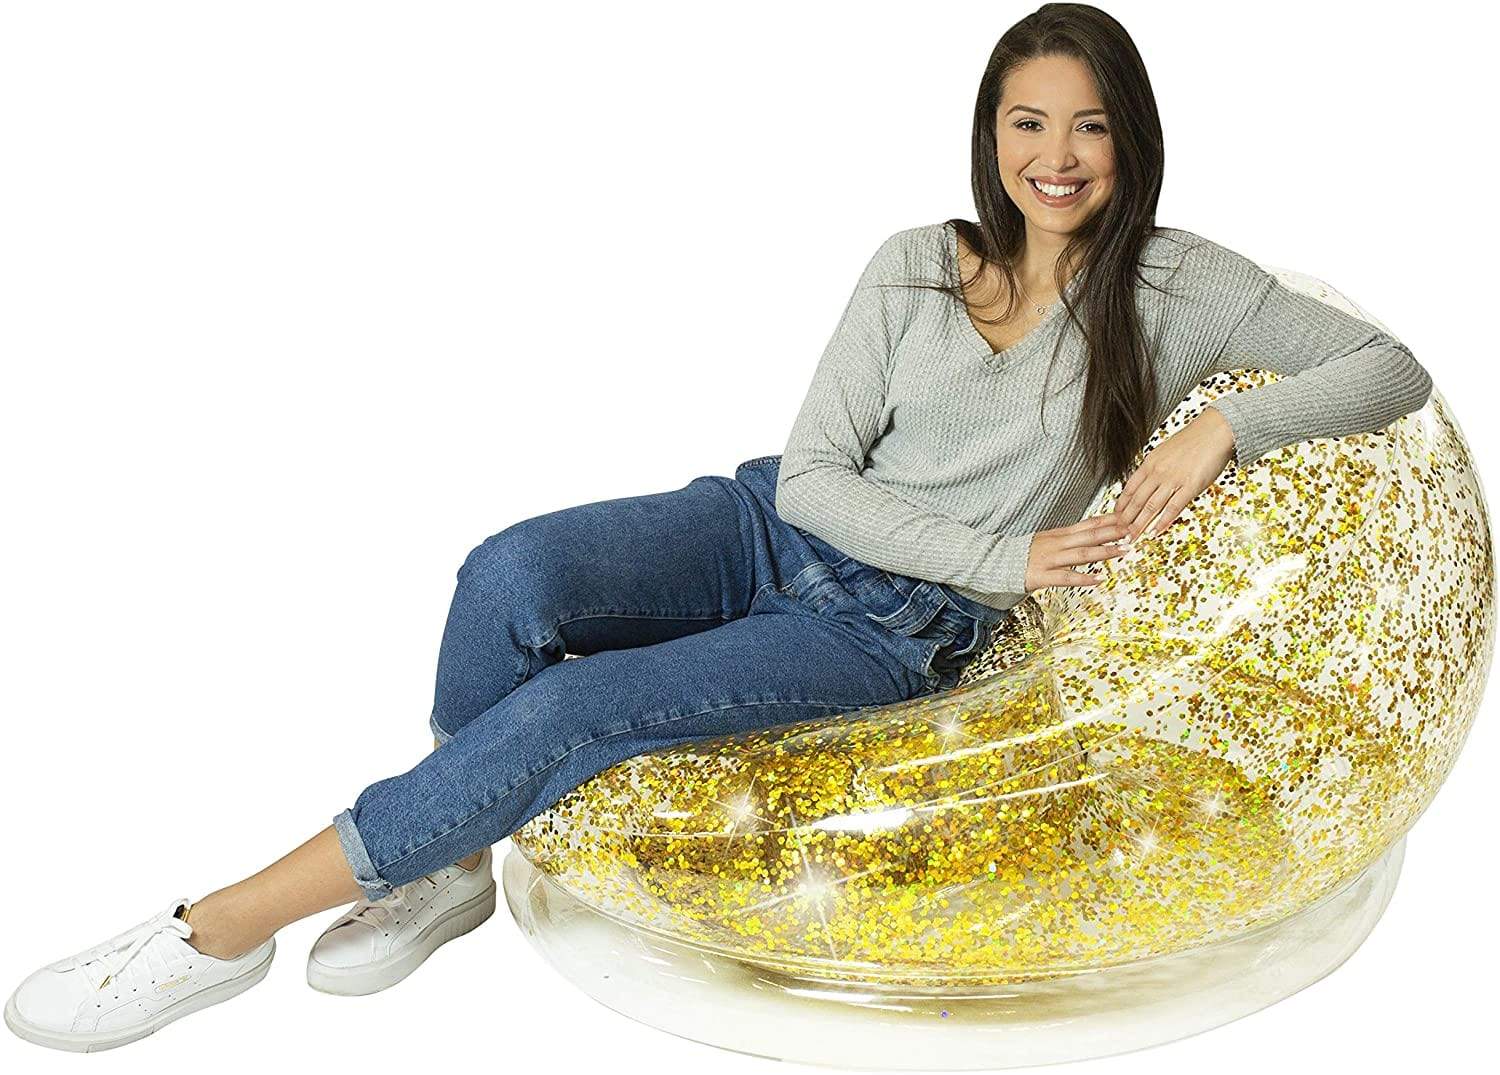 HomeBound Essentials Sparkling Chair - Indoor/Outdoor Confetti Glitter Inflatable Lounger